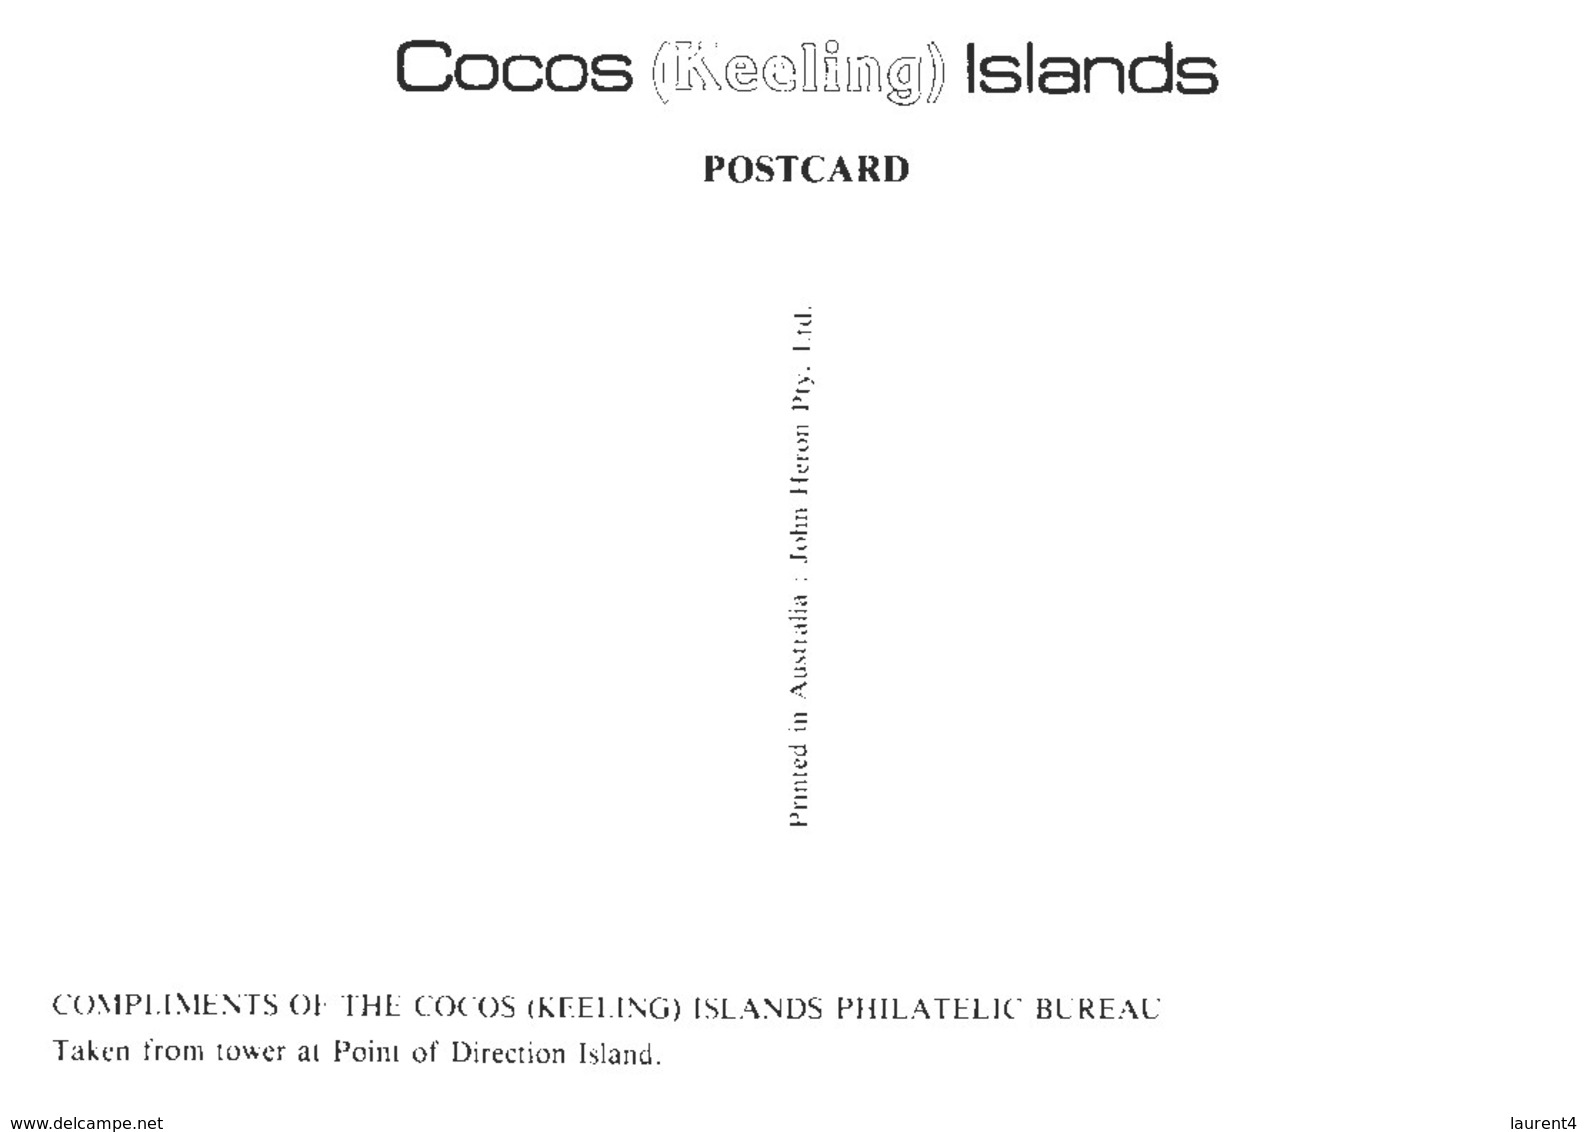 (501) Cocos Island Seaside - Cocos (Keeling) Islands